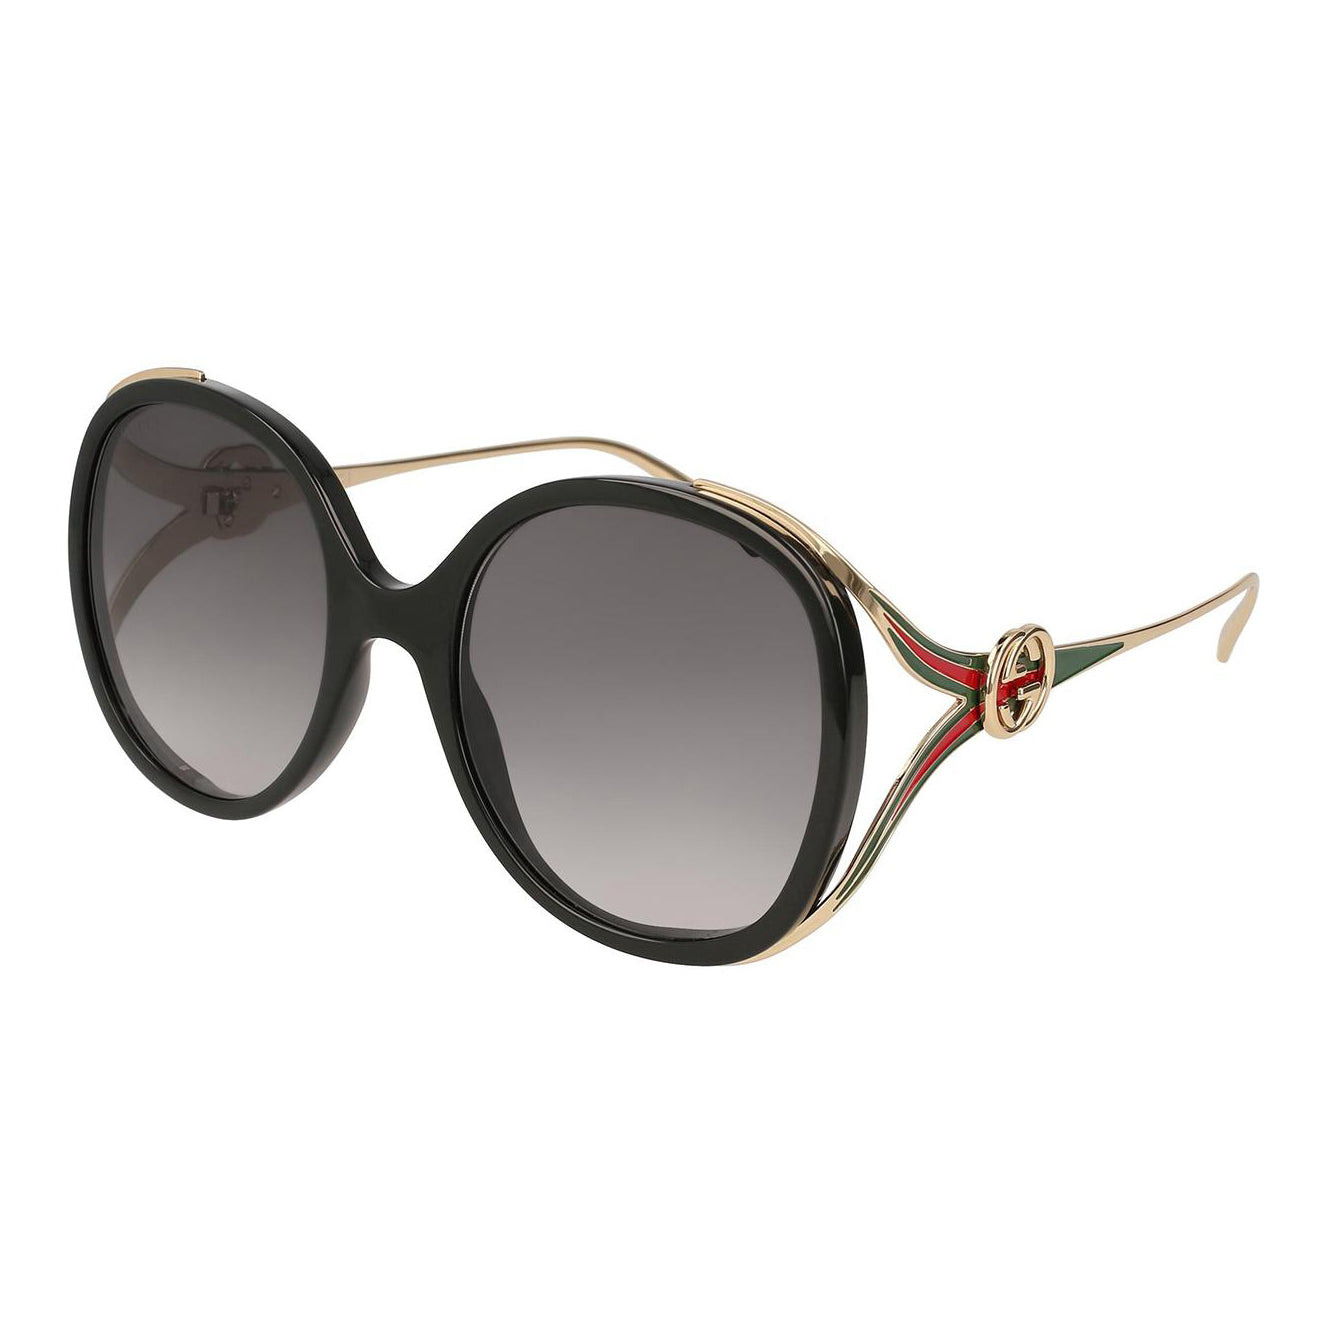 Gucci Women's Sunglasses Oversized Round Black/Gold GG0226S-001 56